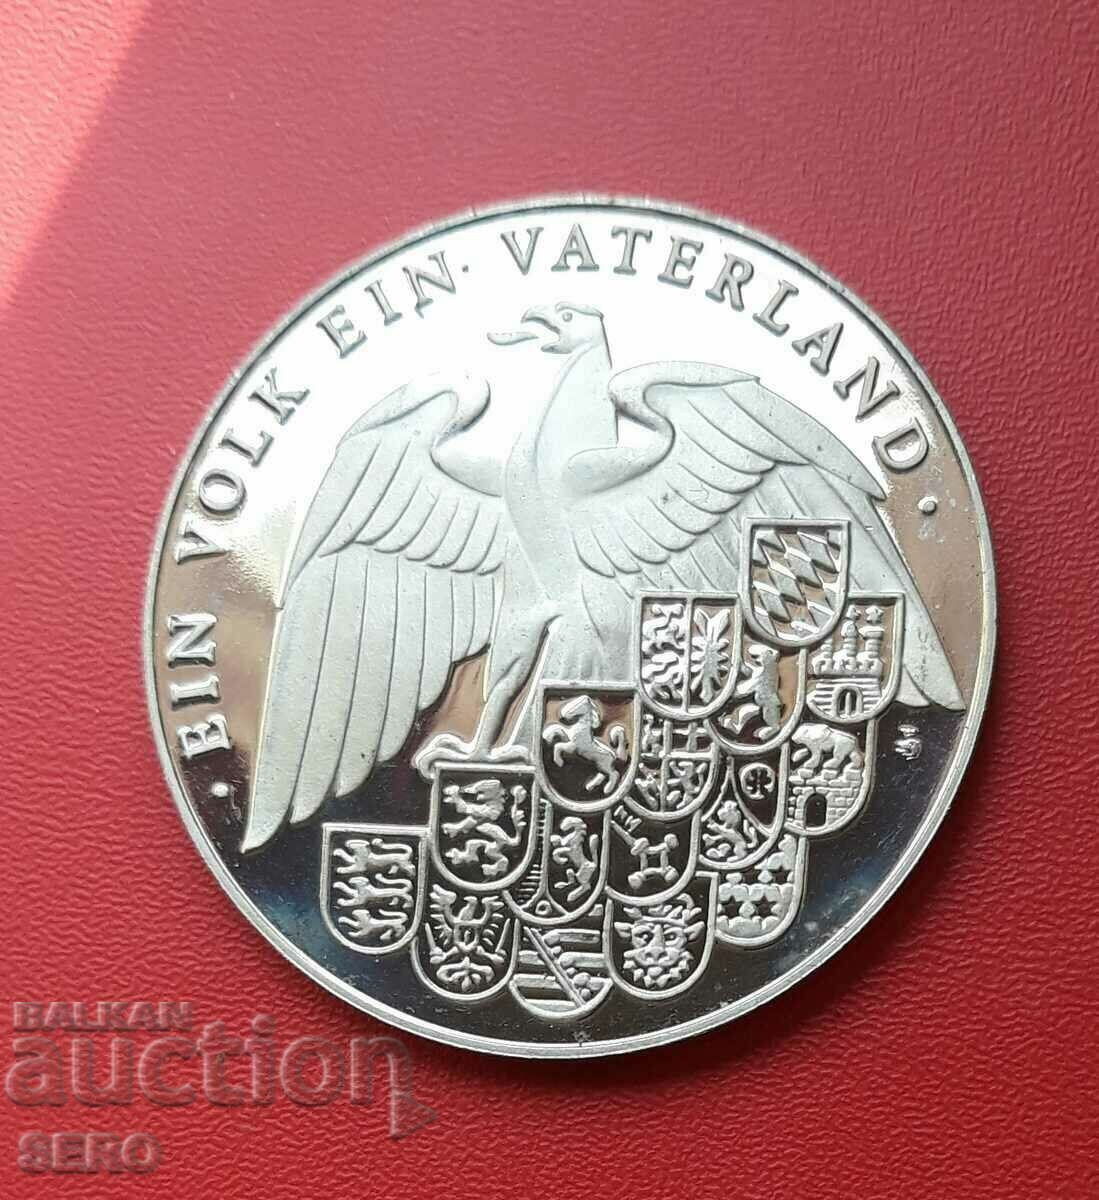 Germany-medal-200 years Brandenburg Gate